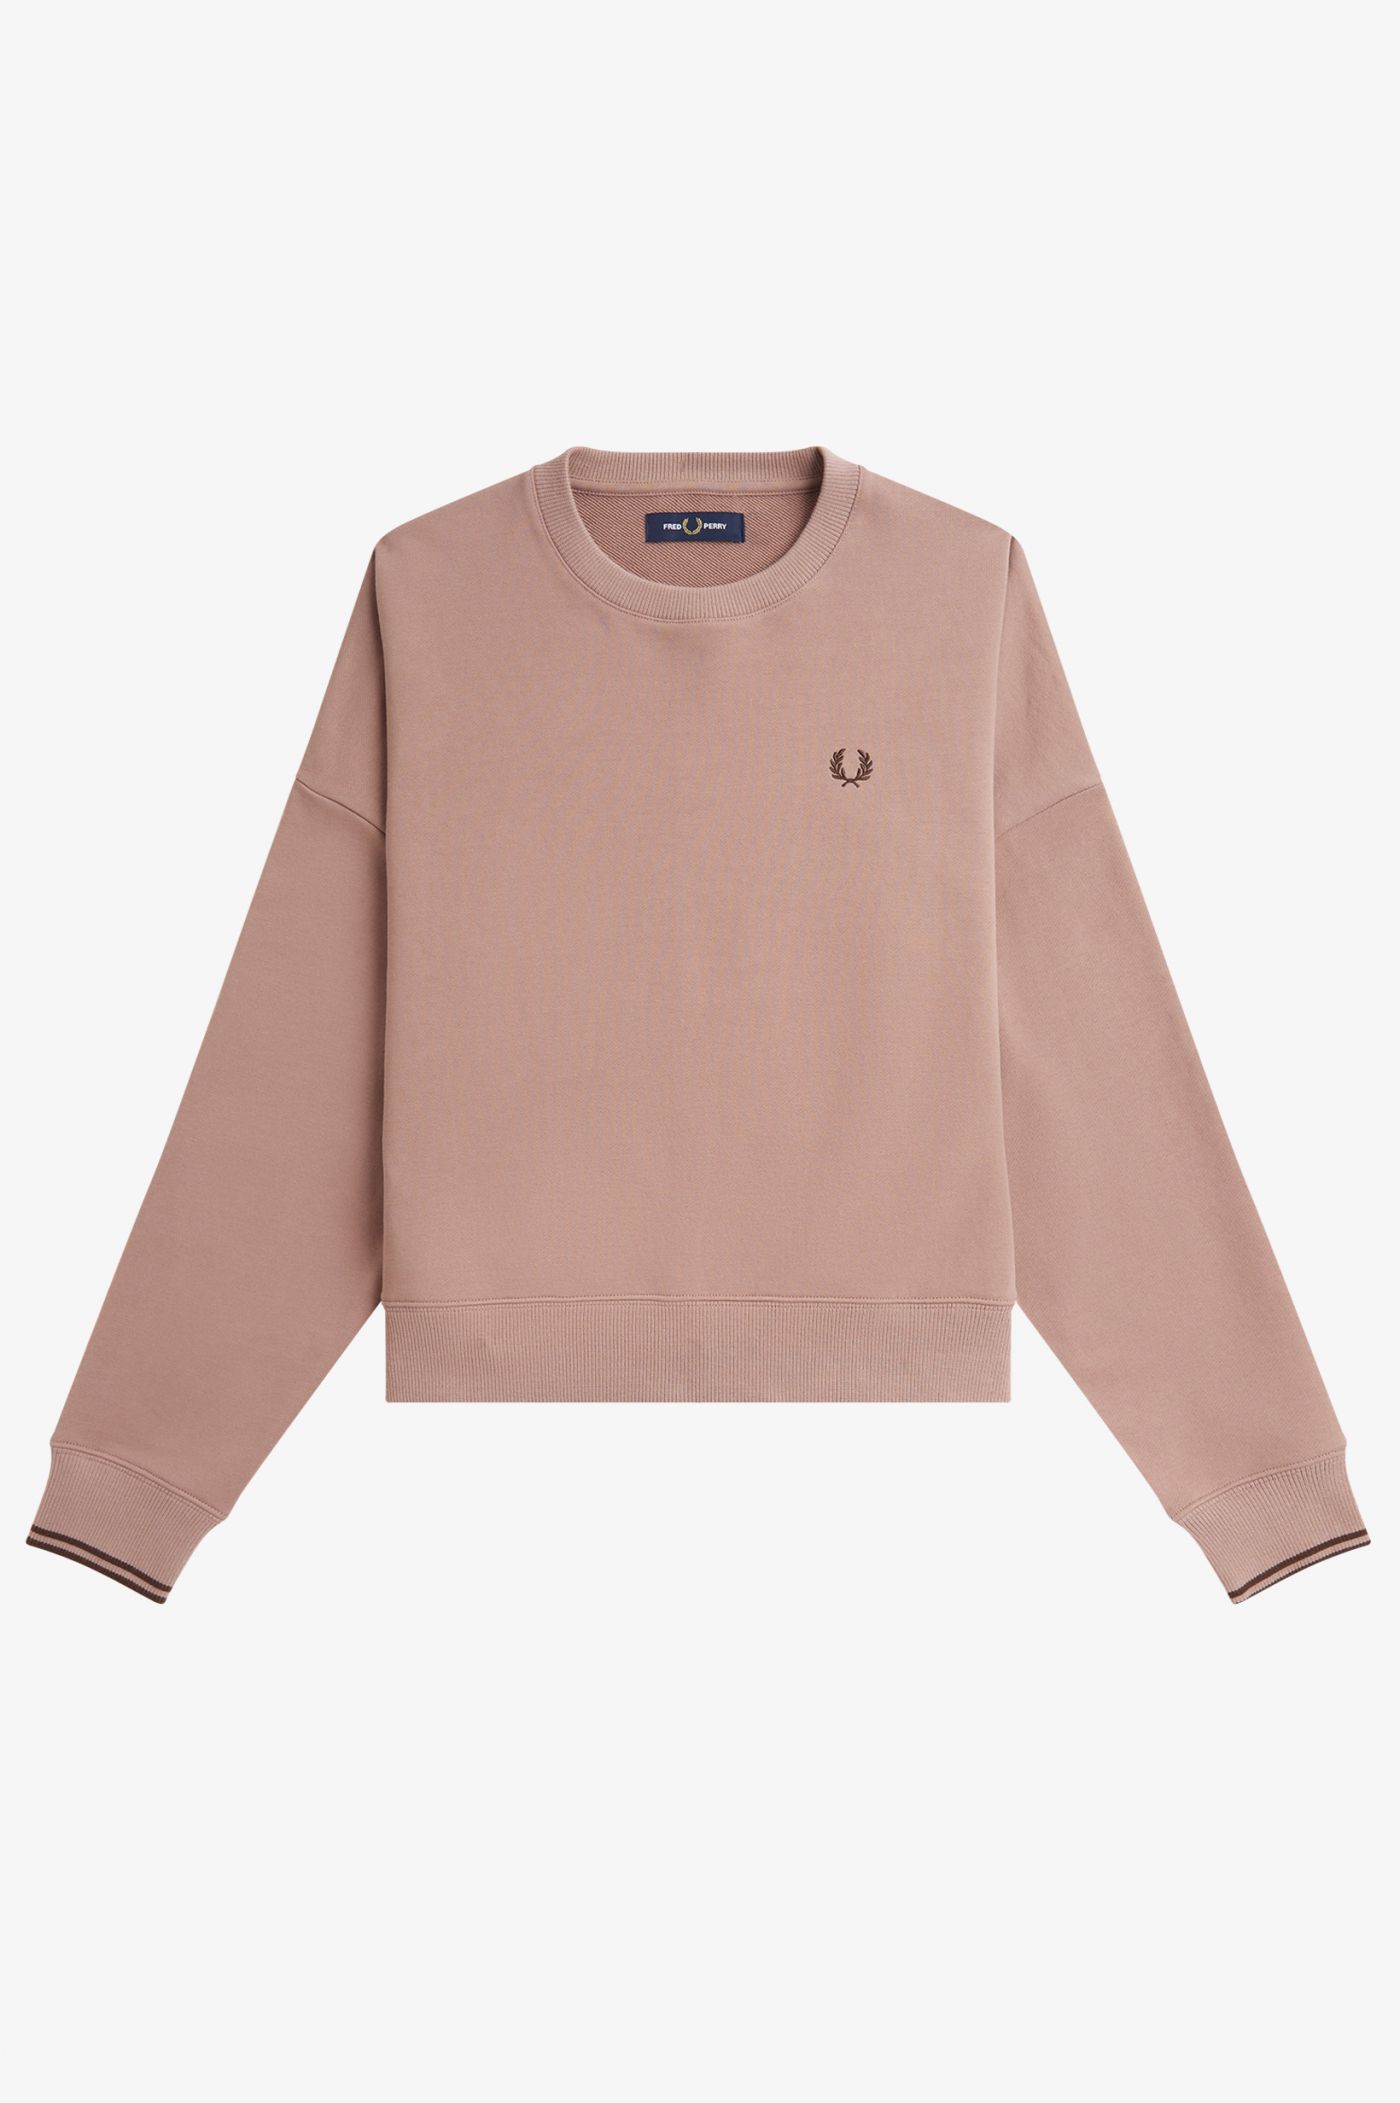 Tipped Sweatshirt - Dark Pink / Whisky Brown | Women's Sweatshirts